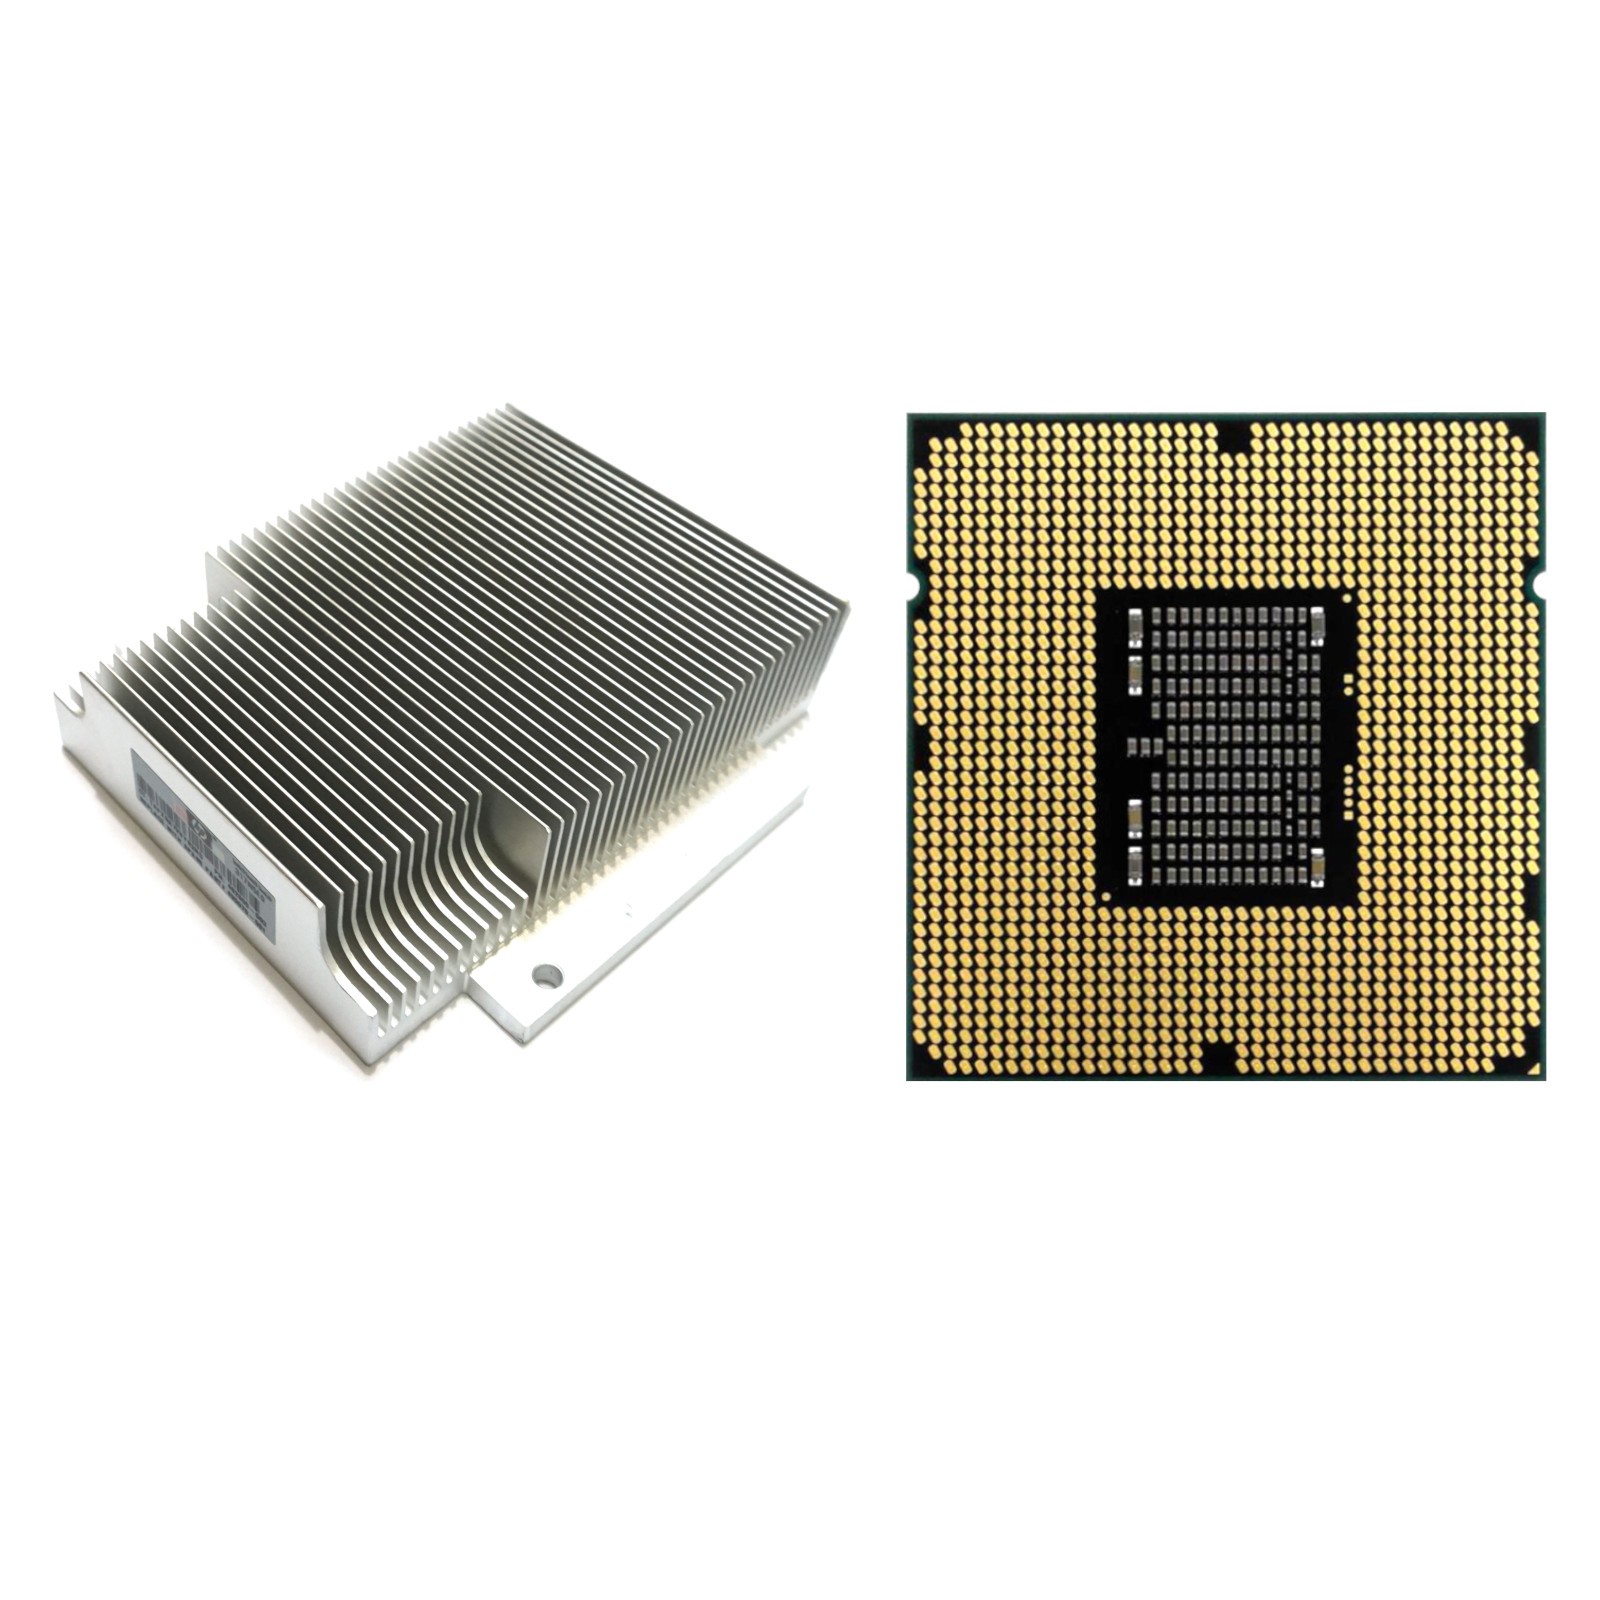 HP (633789-L21) ProLiant DL360 G7 - Intel Xeon E5606 CPU1 Kit